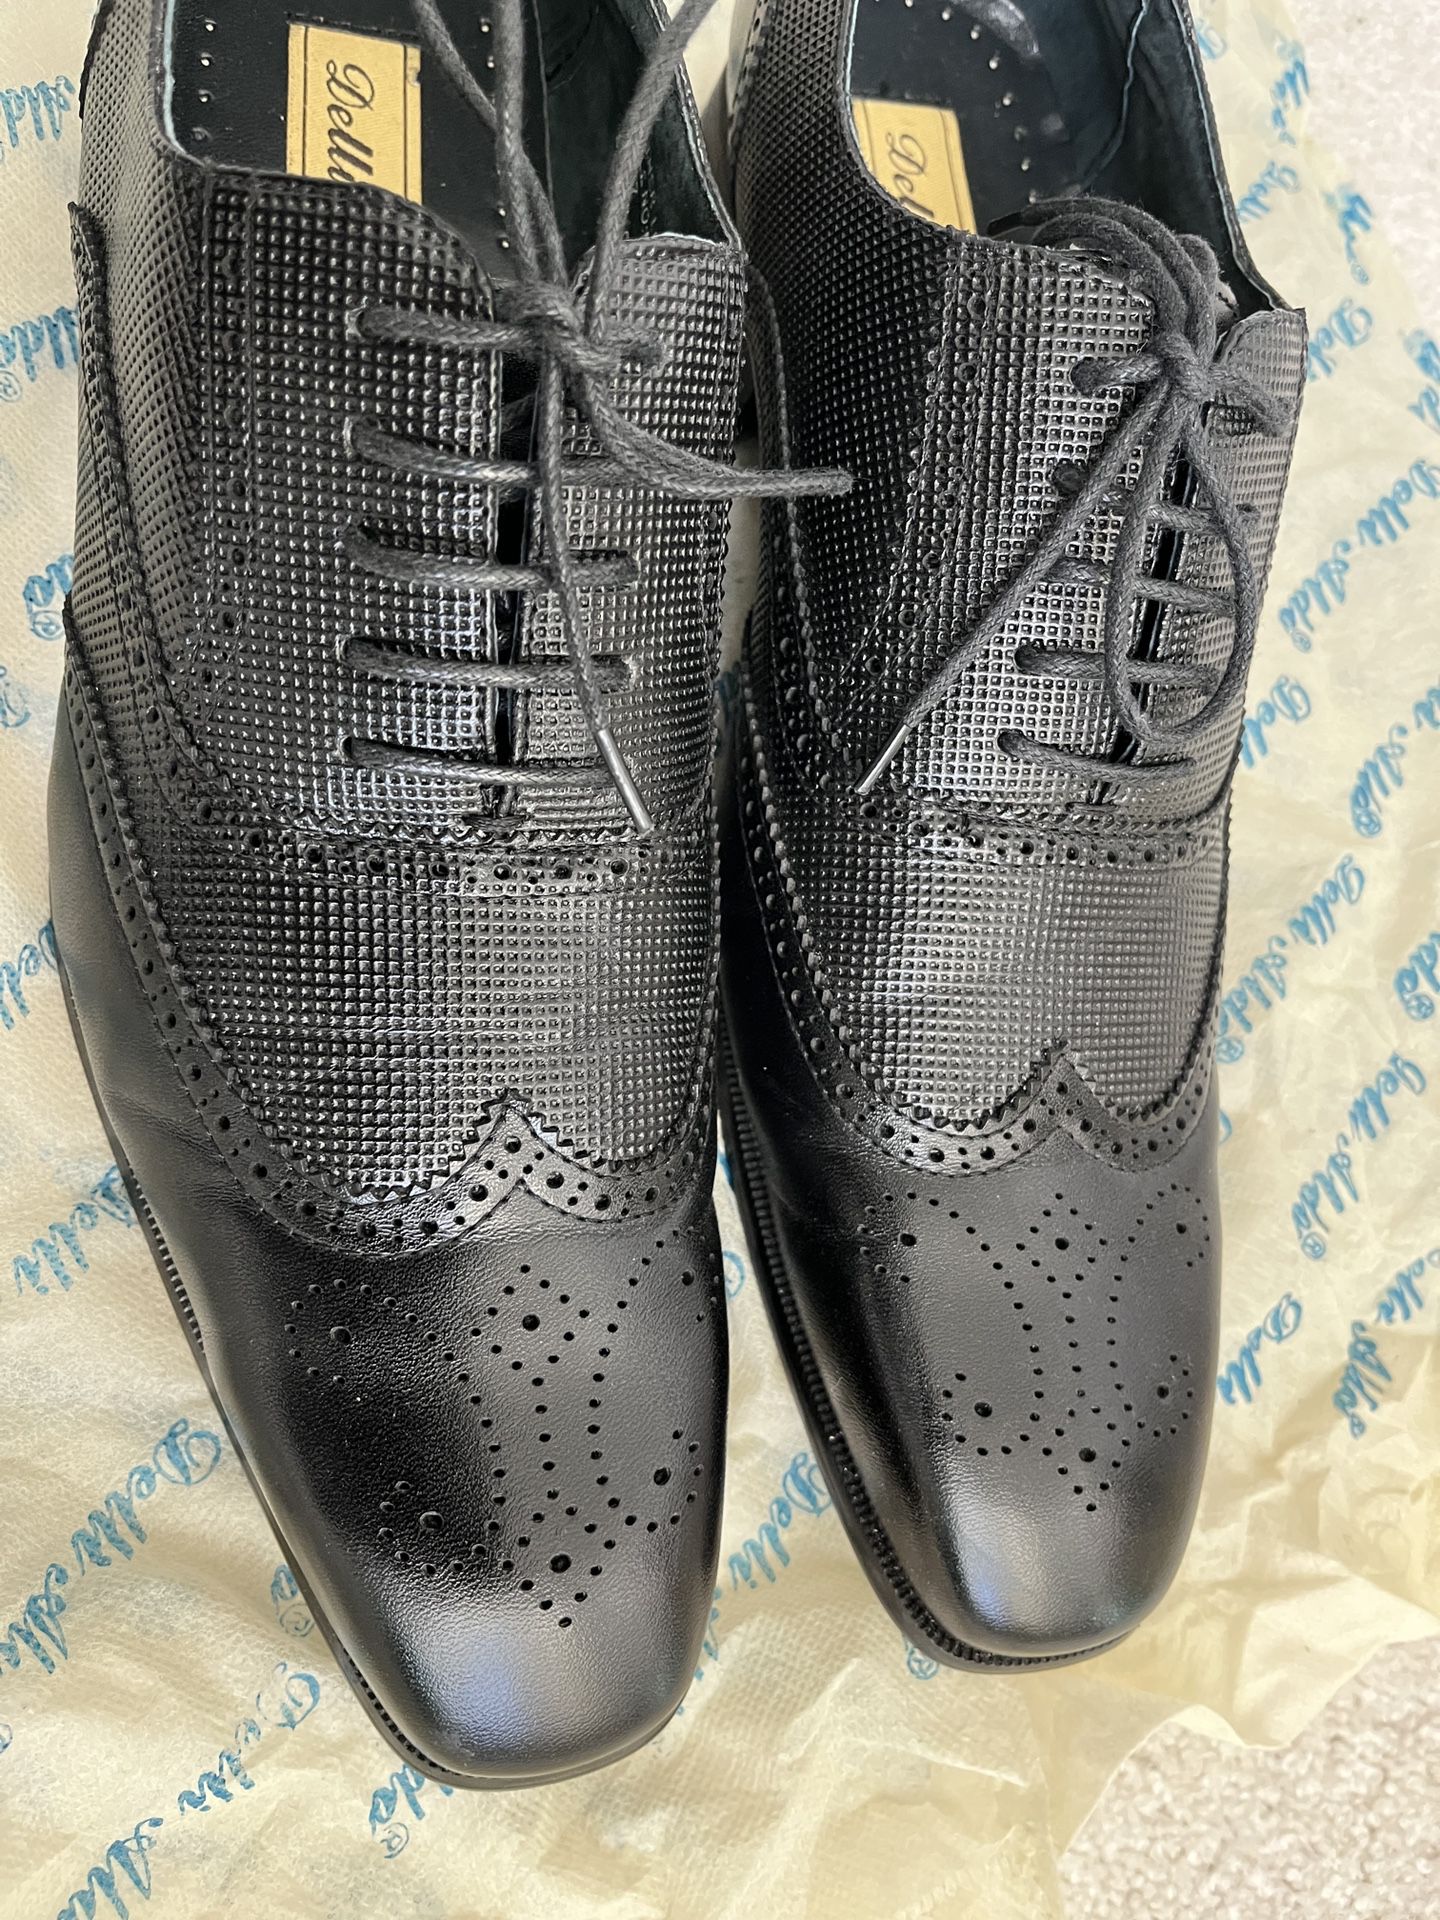 Delli Aldo Men Shoe. Fits 7.5-8